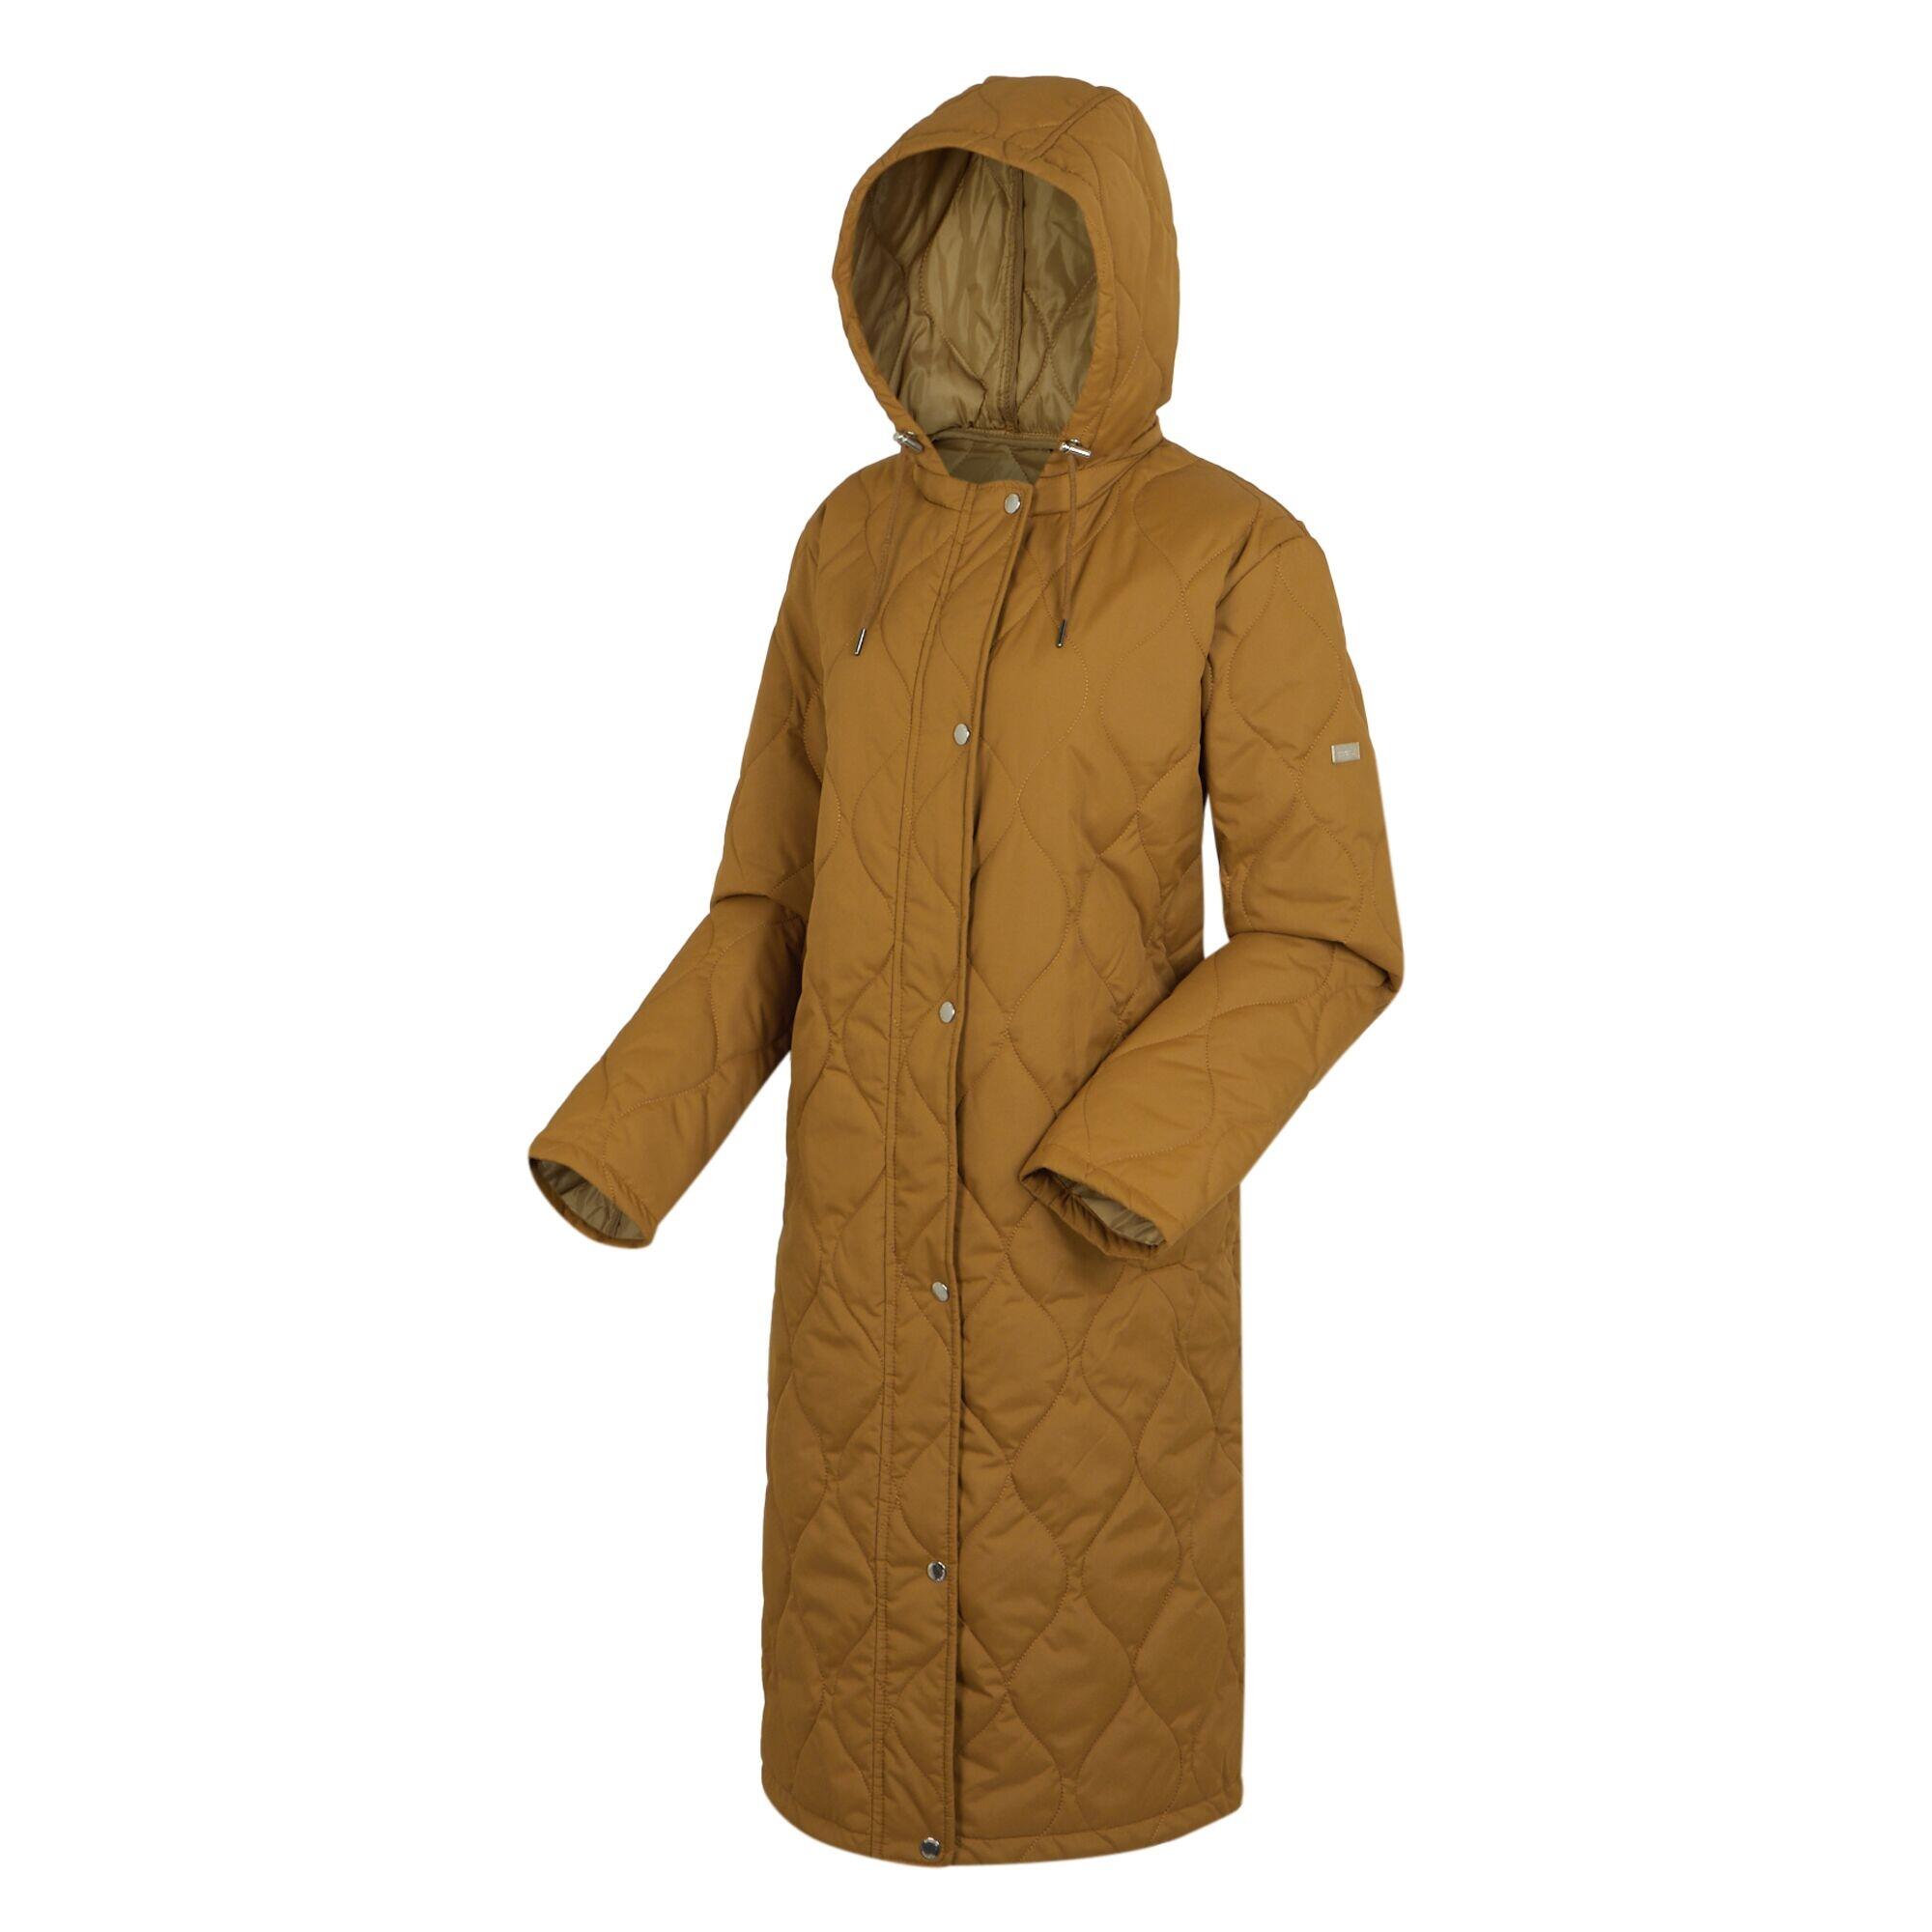 Womens/Ladies Jaycee Quilted Hooded Jacket (Rubber/Barleycorn) 4/5